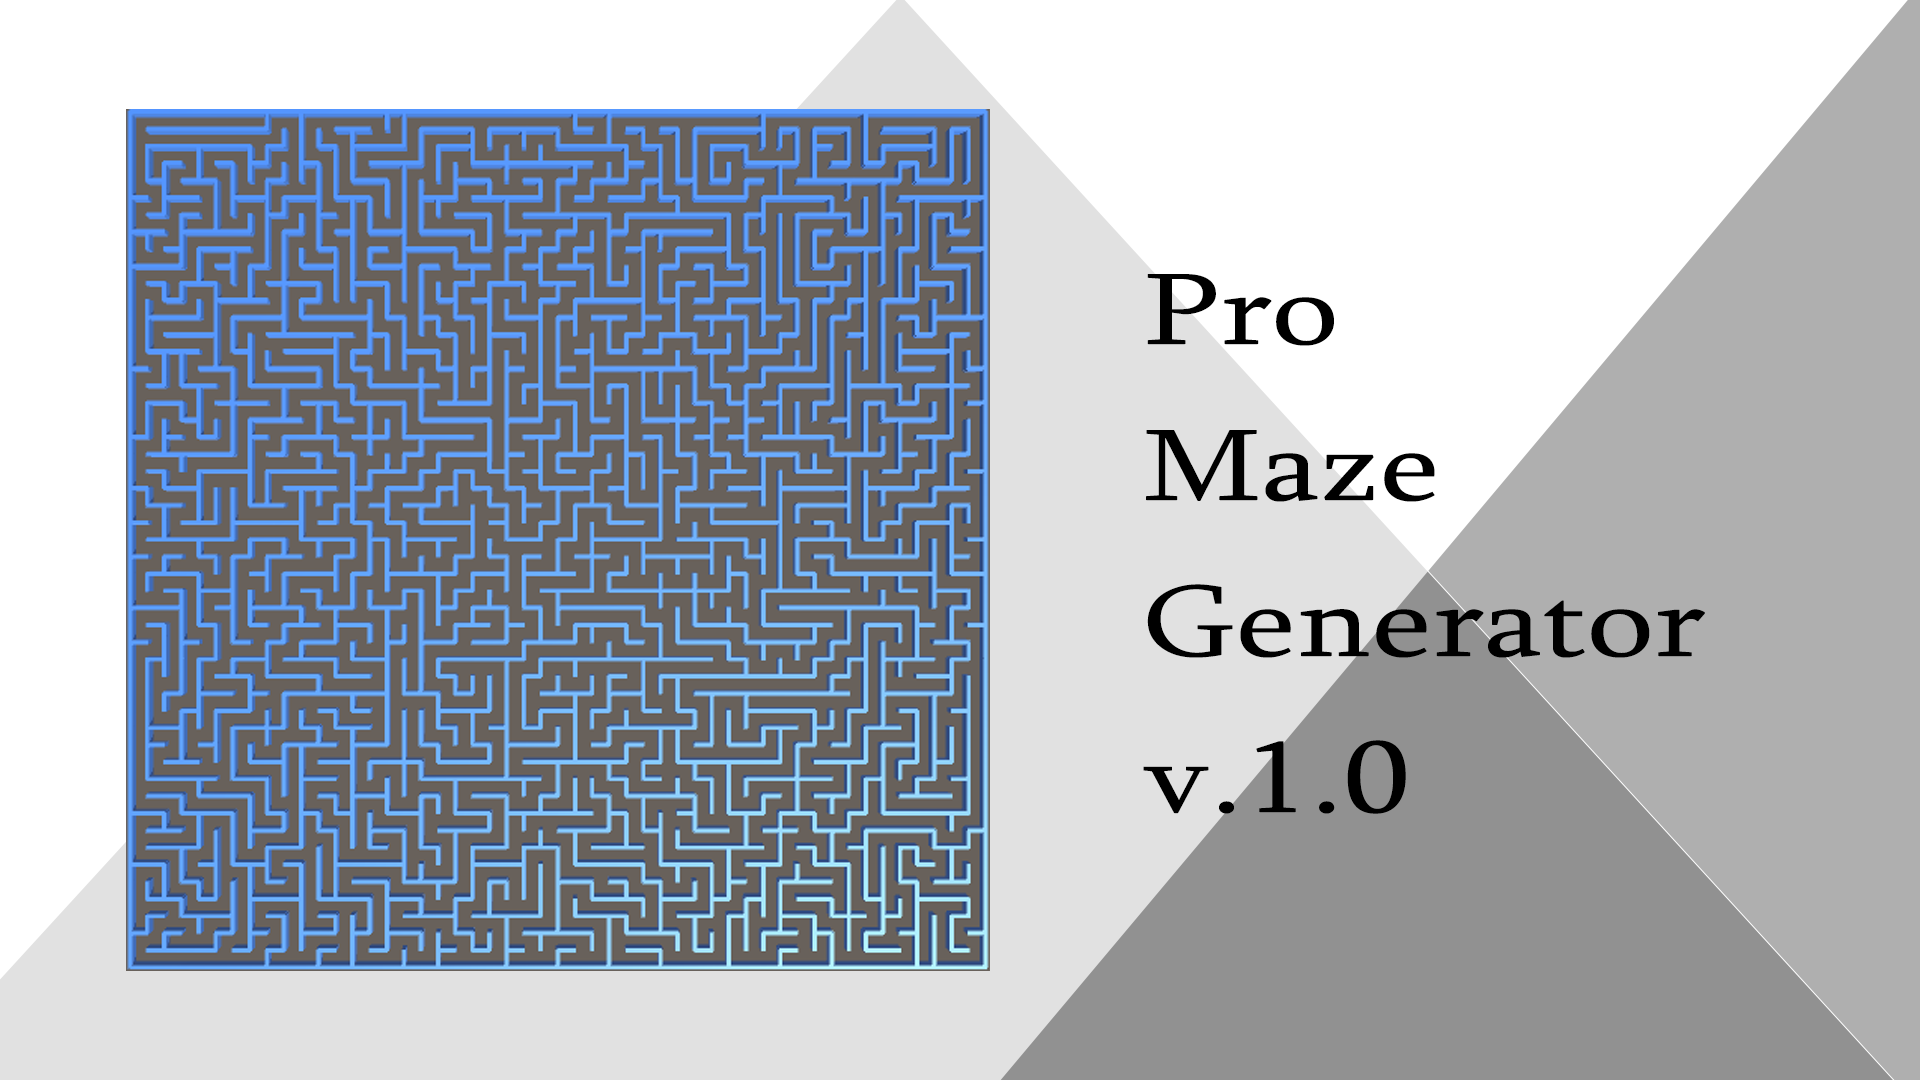 Pro Maze Generator